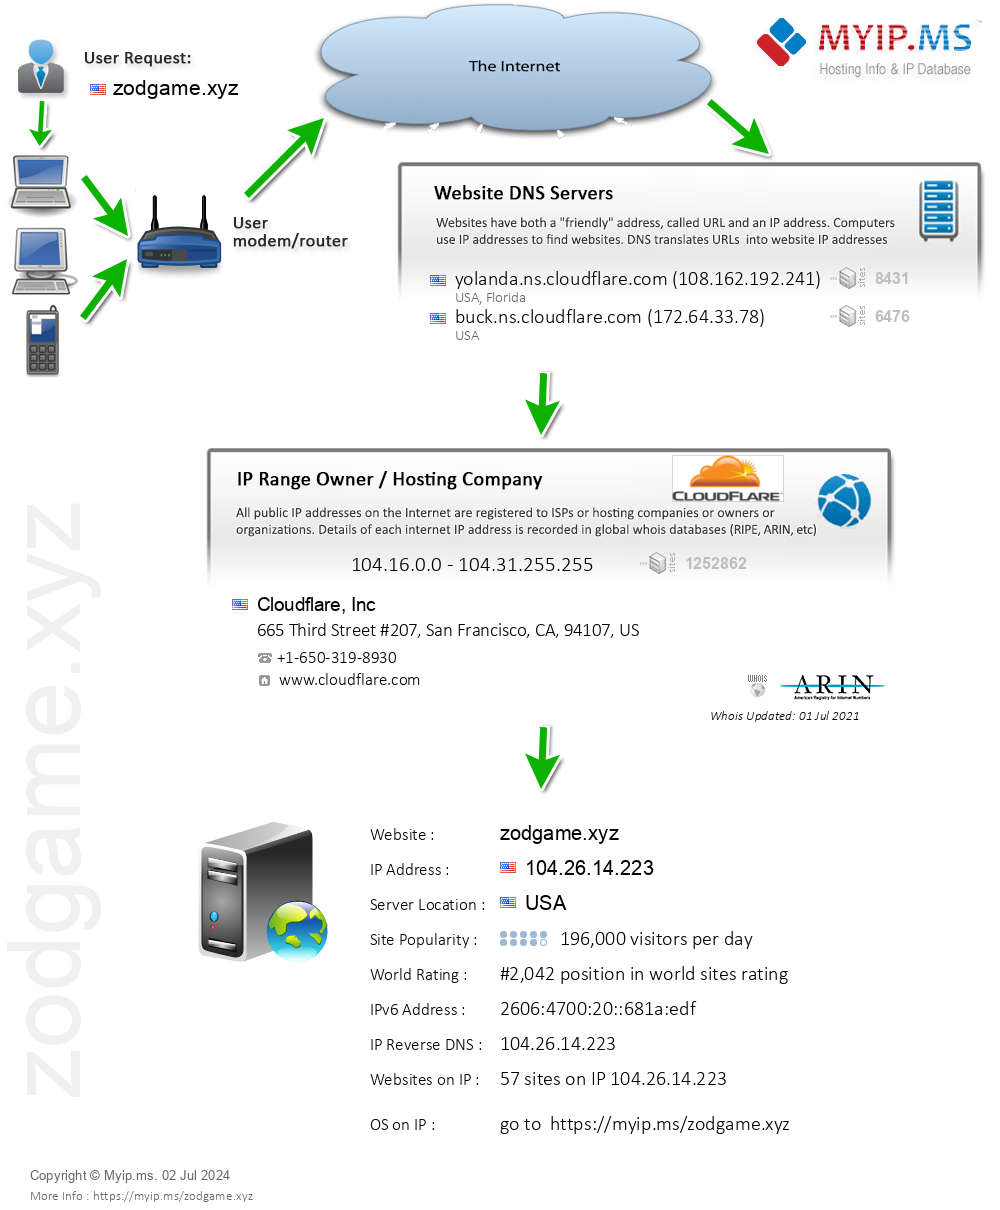 Zodgame.xyz - Website Hosting Visual IP Diagram